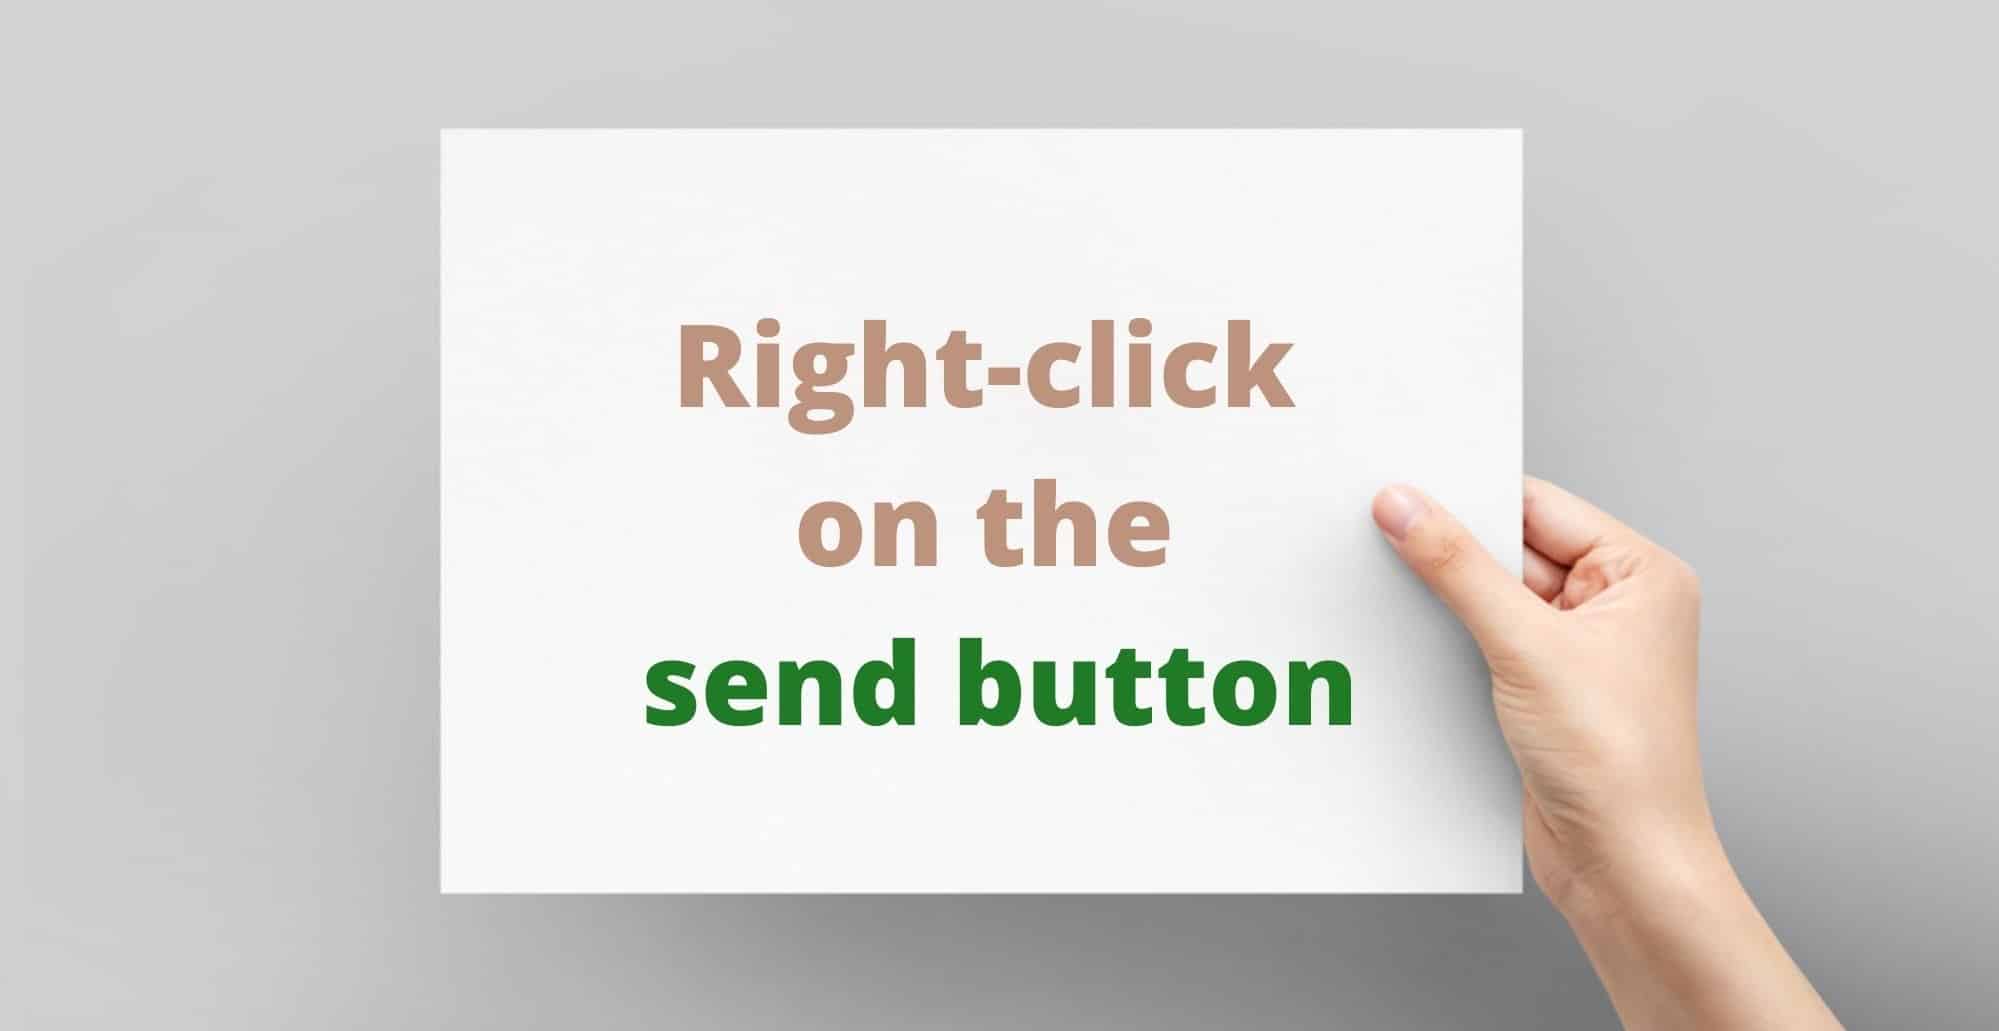 Right-click on the send button